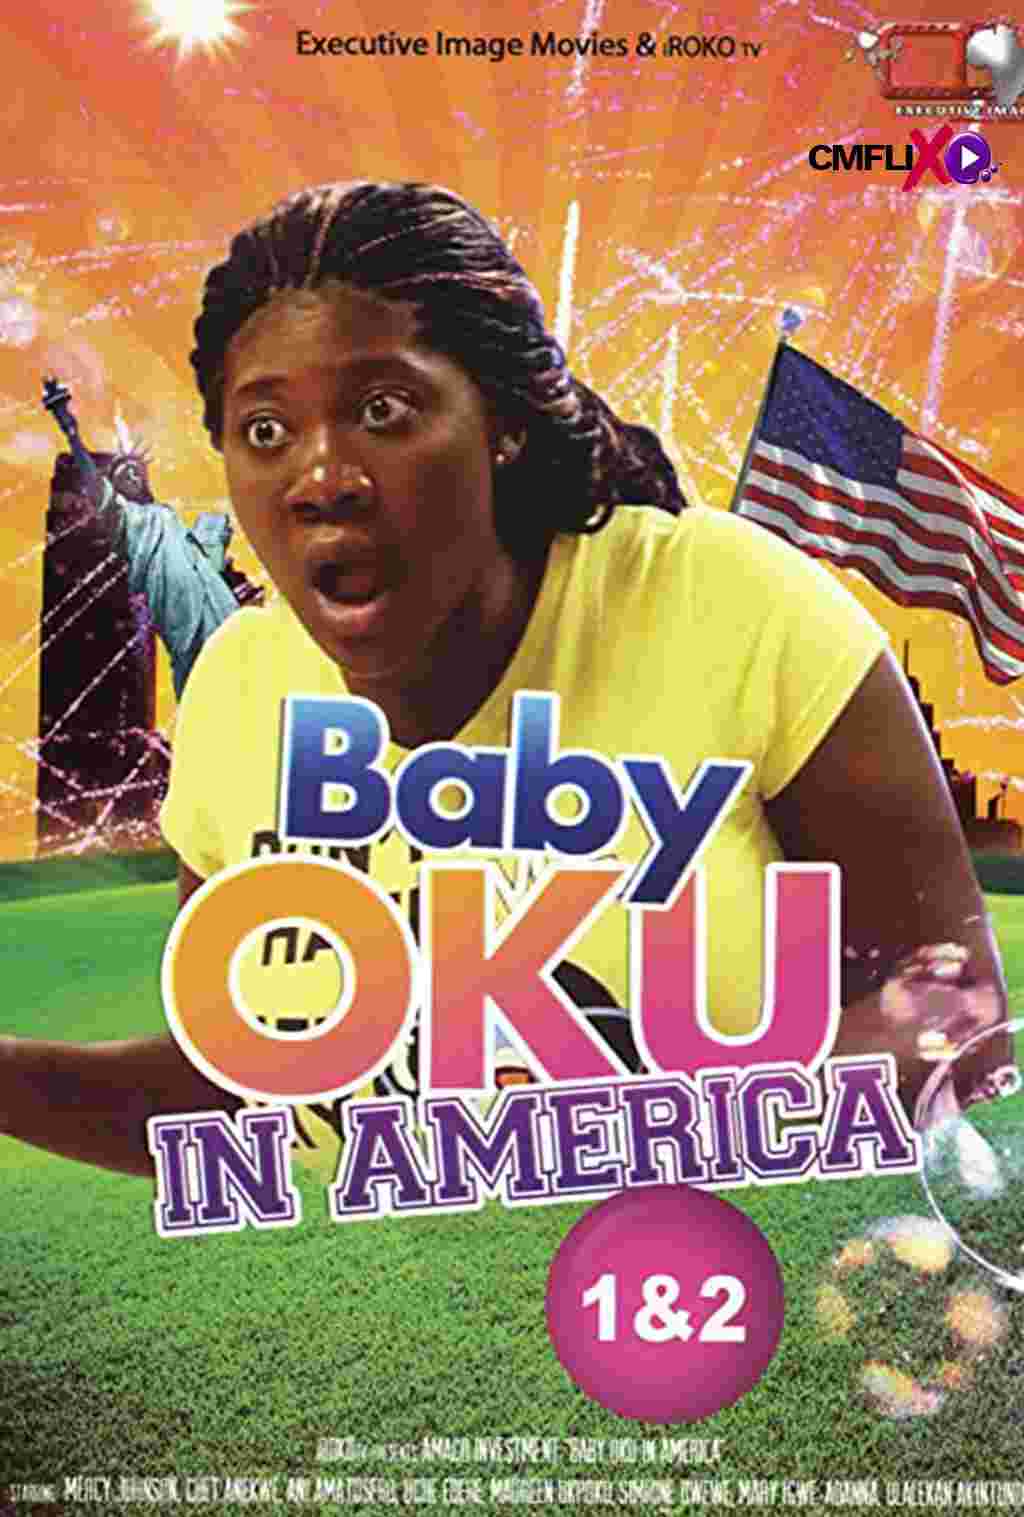 THE RETURN OF BABY OKU IN AMERICA PART 2